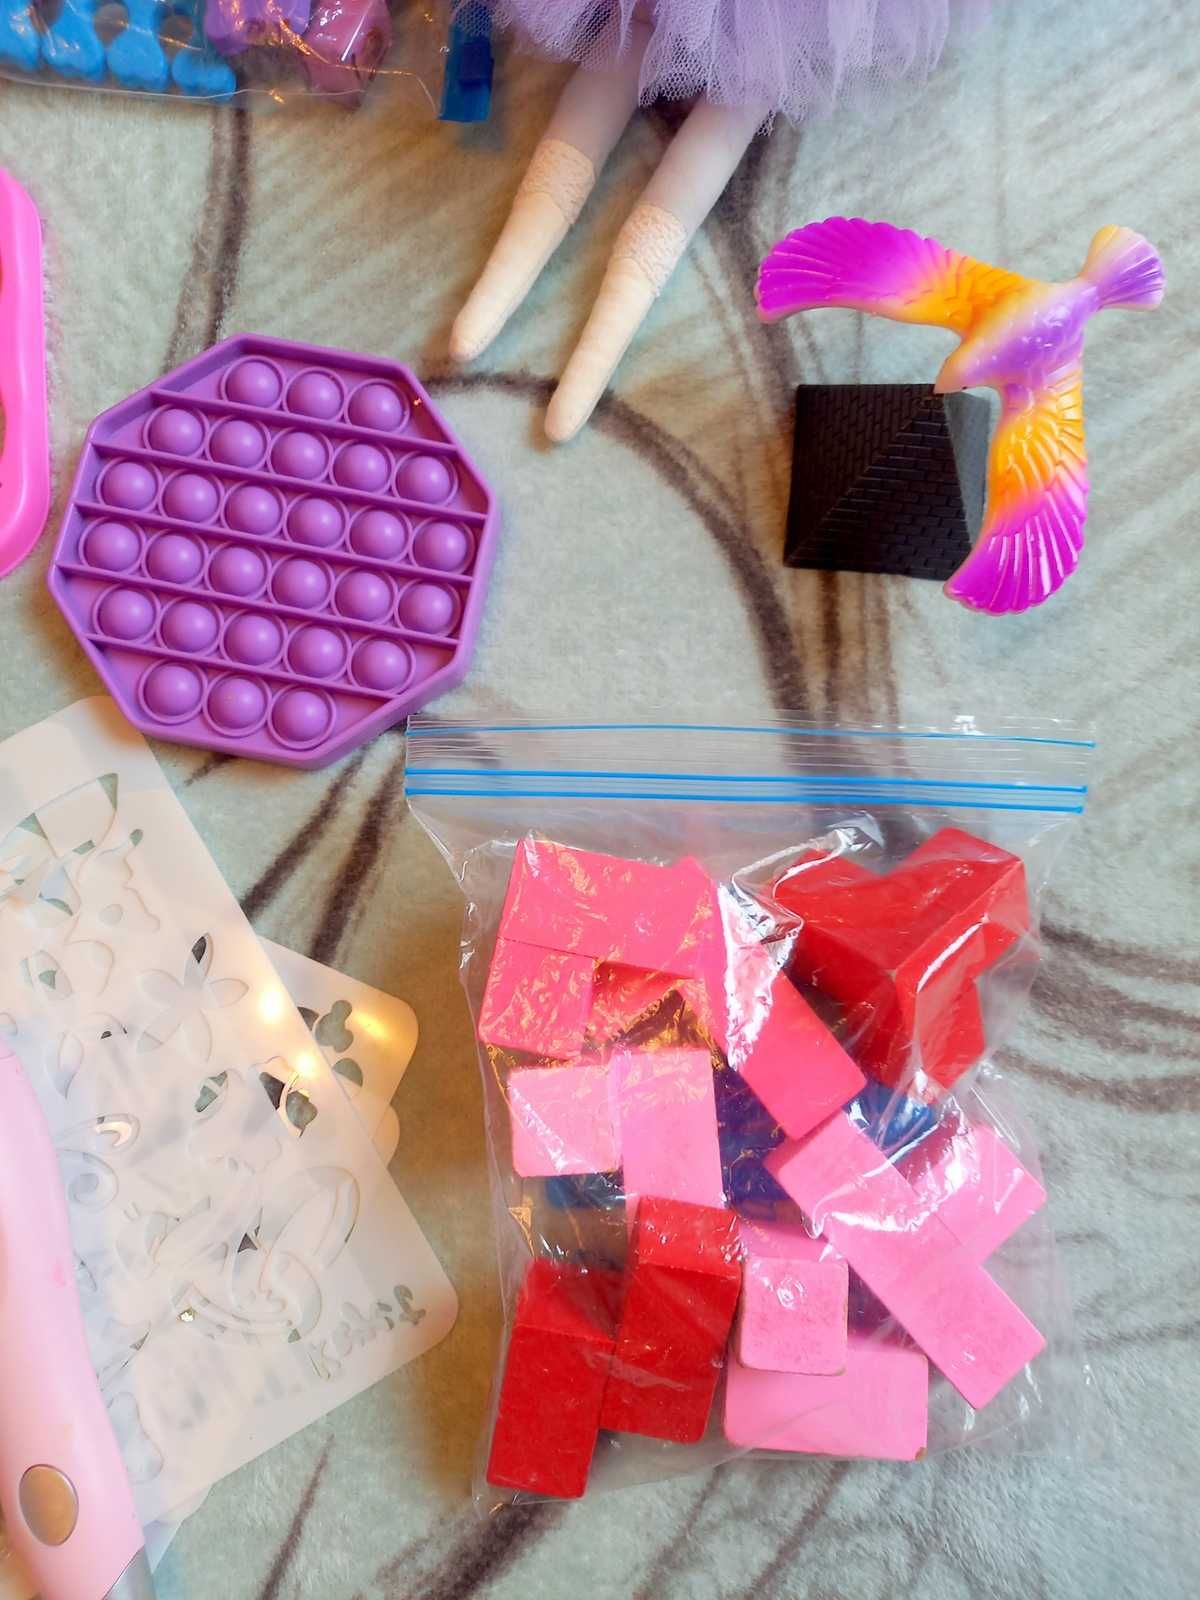 Zestaw zabawek: lalka Hand Made, manicure, mazaki do dmuchania, pop it